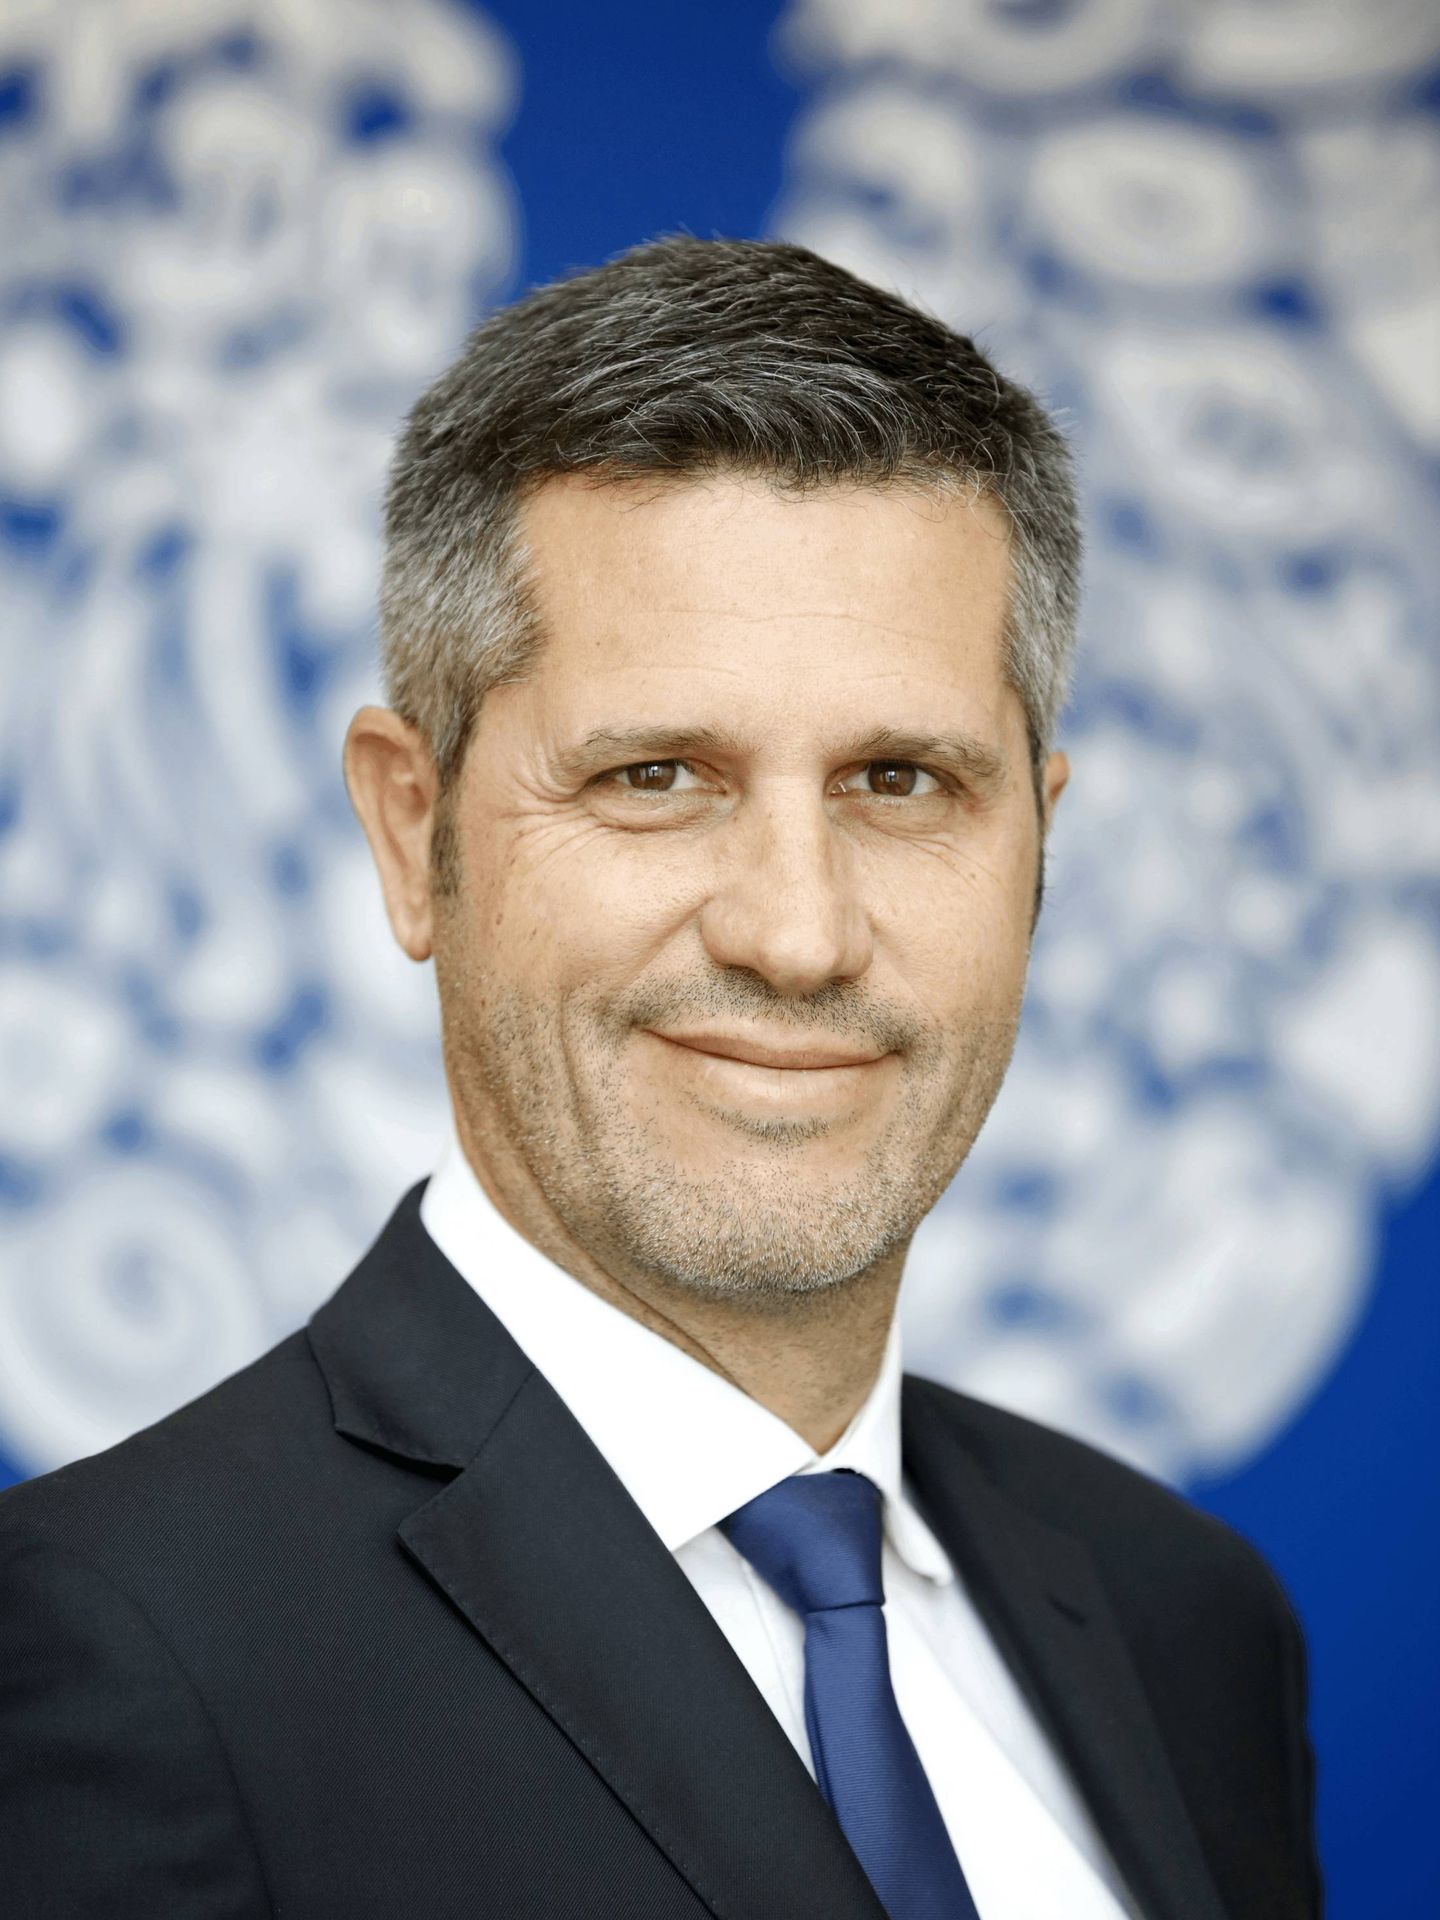 Jerome du Chaffaut, director general de Unilever.